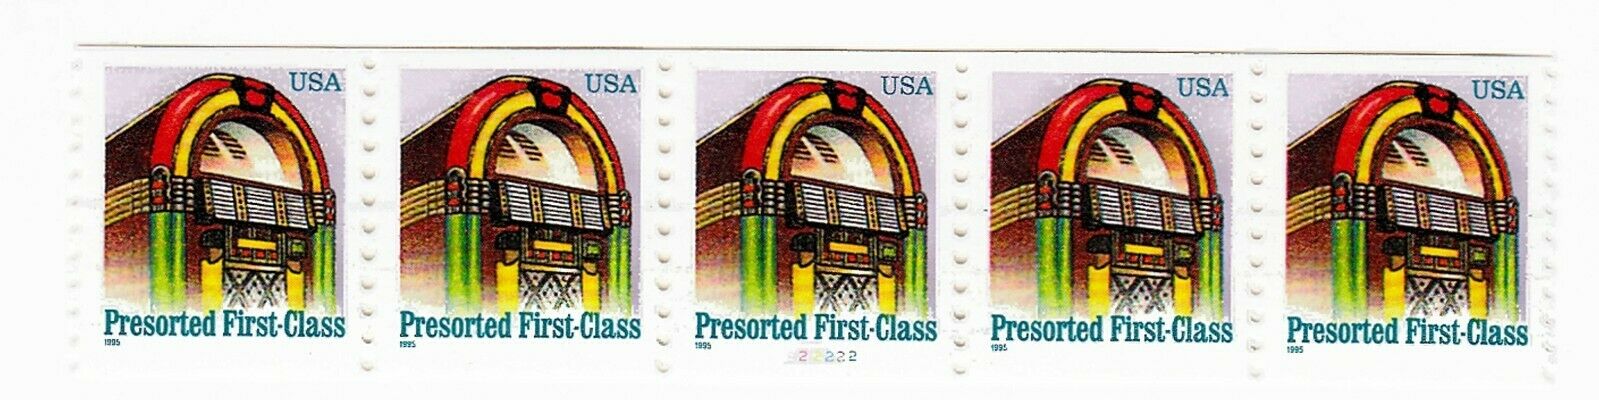 Scott Stamp # 2911, Presorted First Class, Juke Box,  Strip Of 5  Plate # 222222